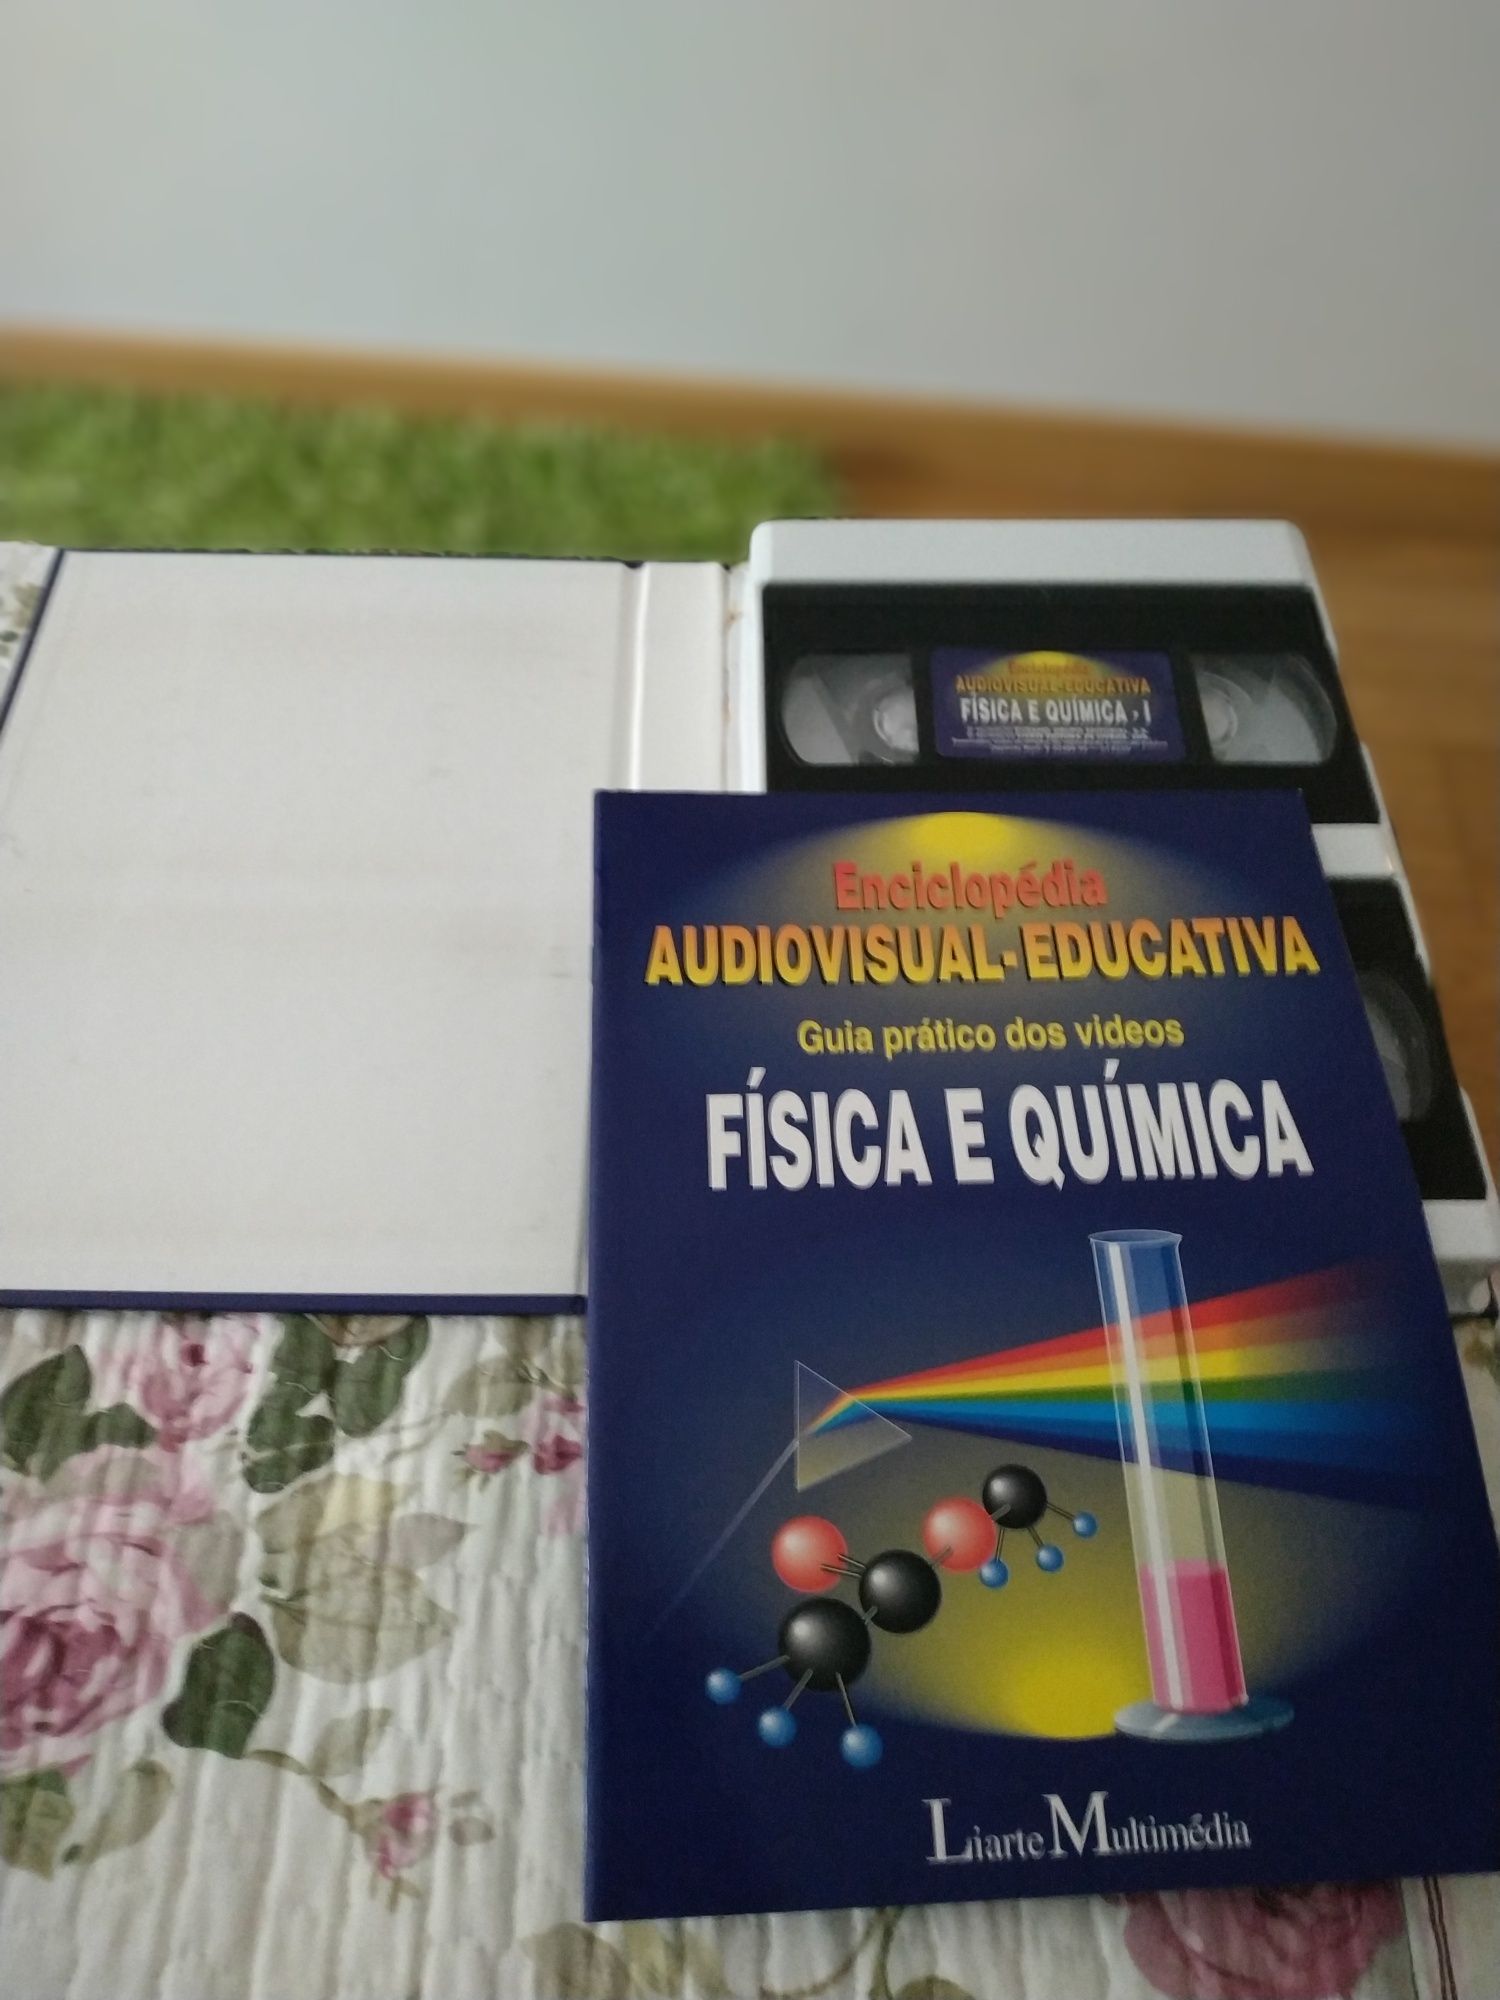 Enciclopédia audiovisual educativa Física e Química